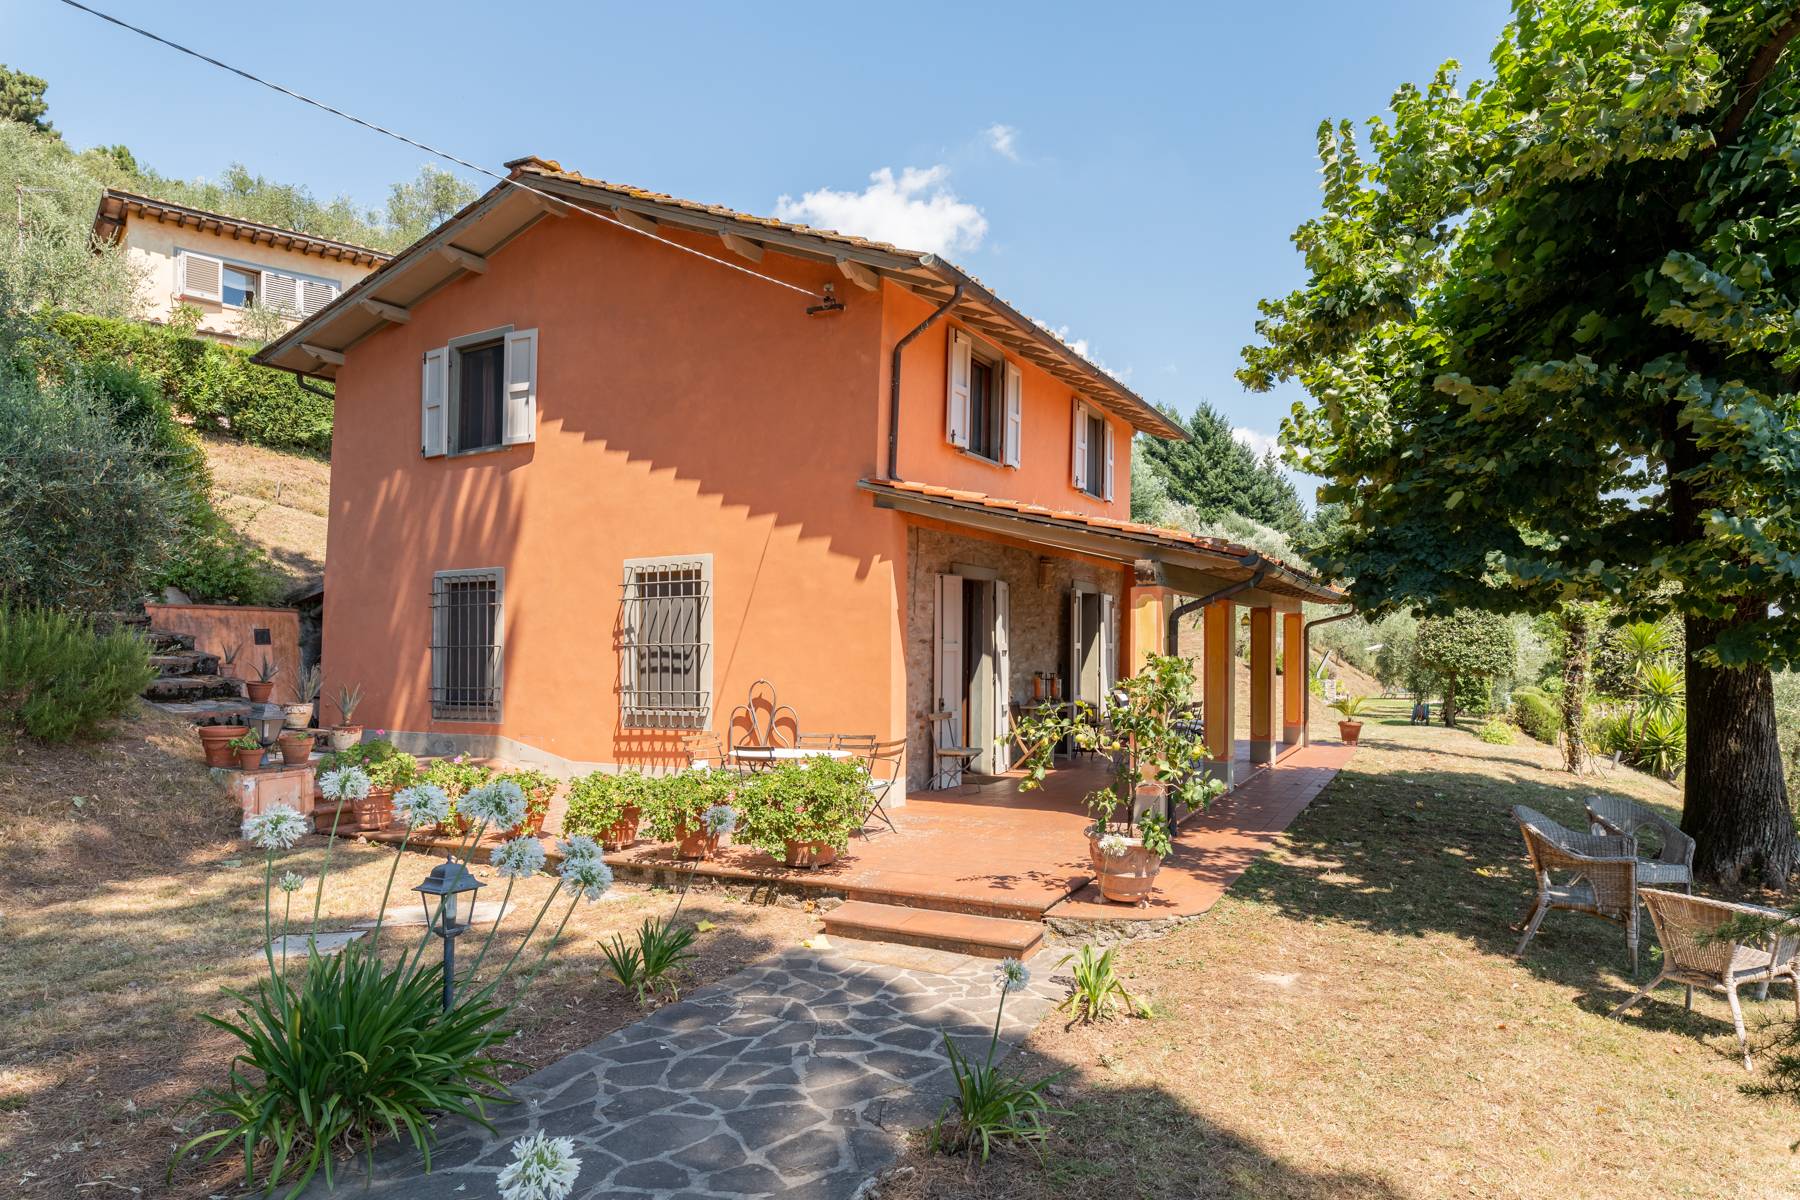 Villa in Vendita a Lucca: 5 locali, 220 mq - Foto 3